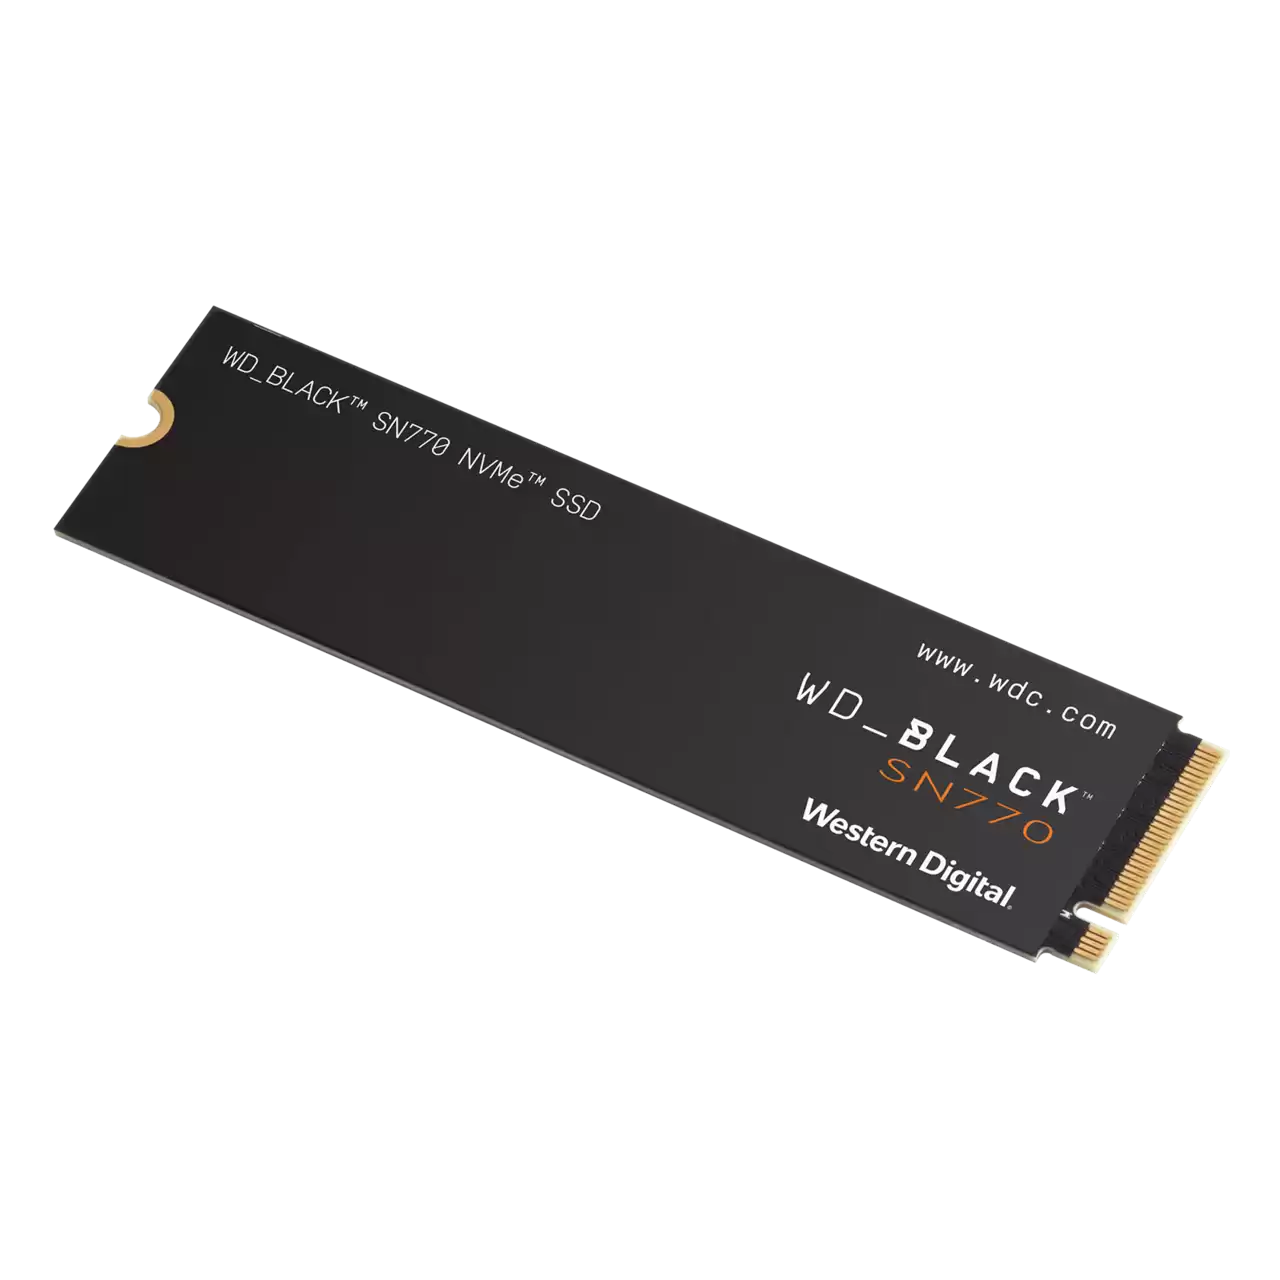 Western Digital WD_BLACK SN770 NVMe SSD 1TB (5150MB/s)